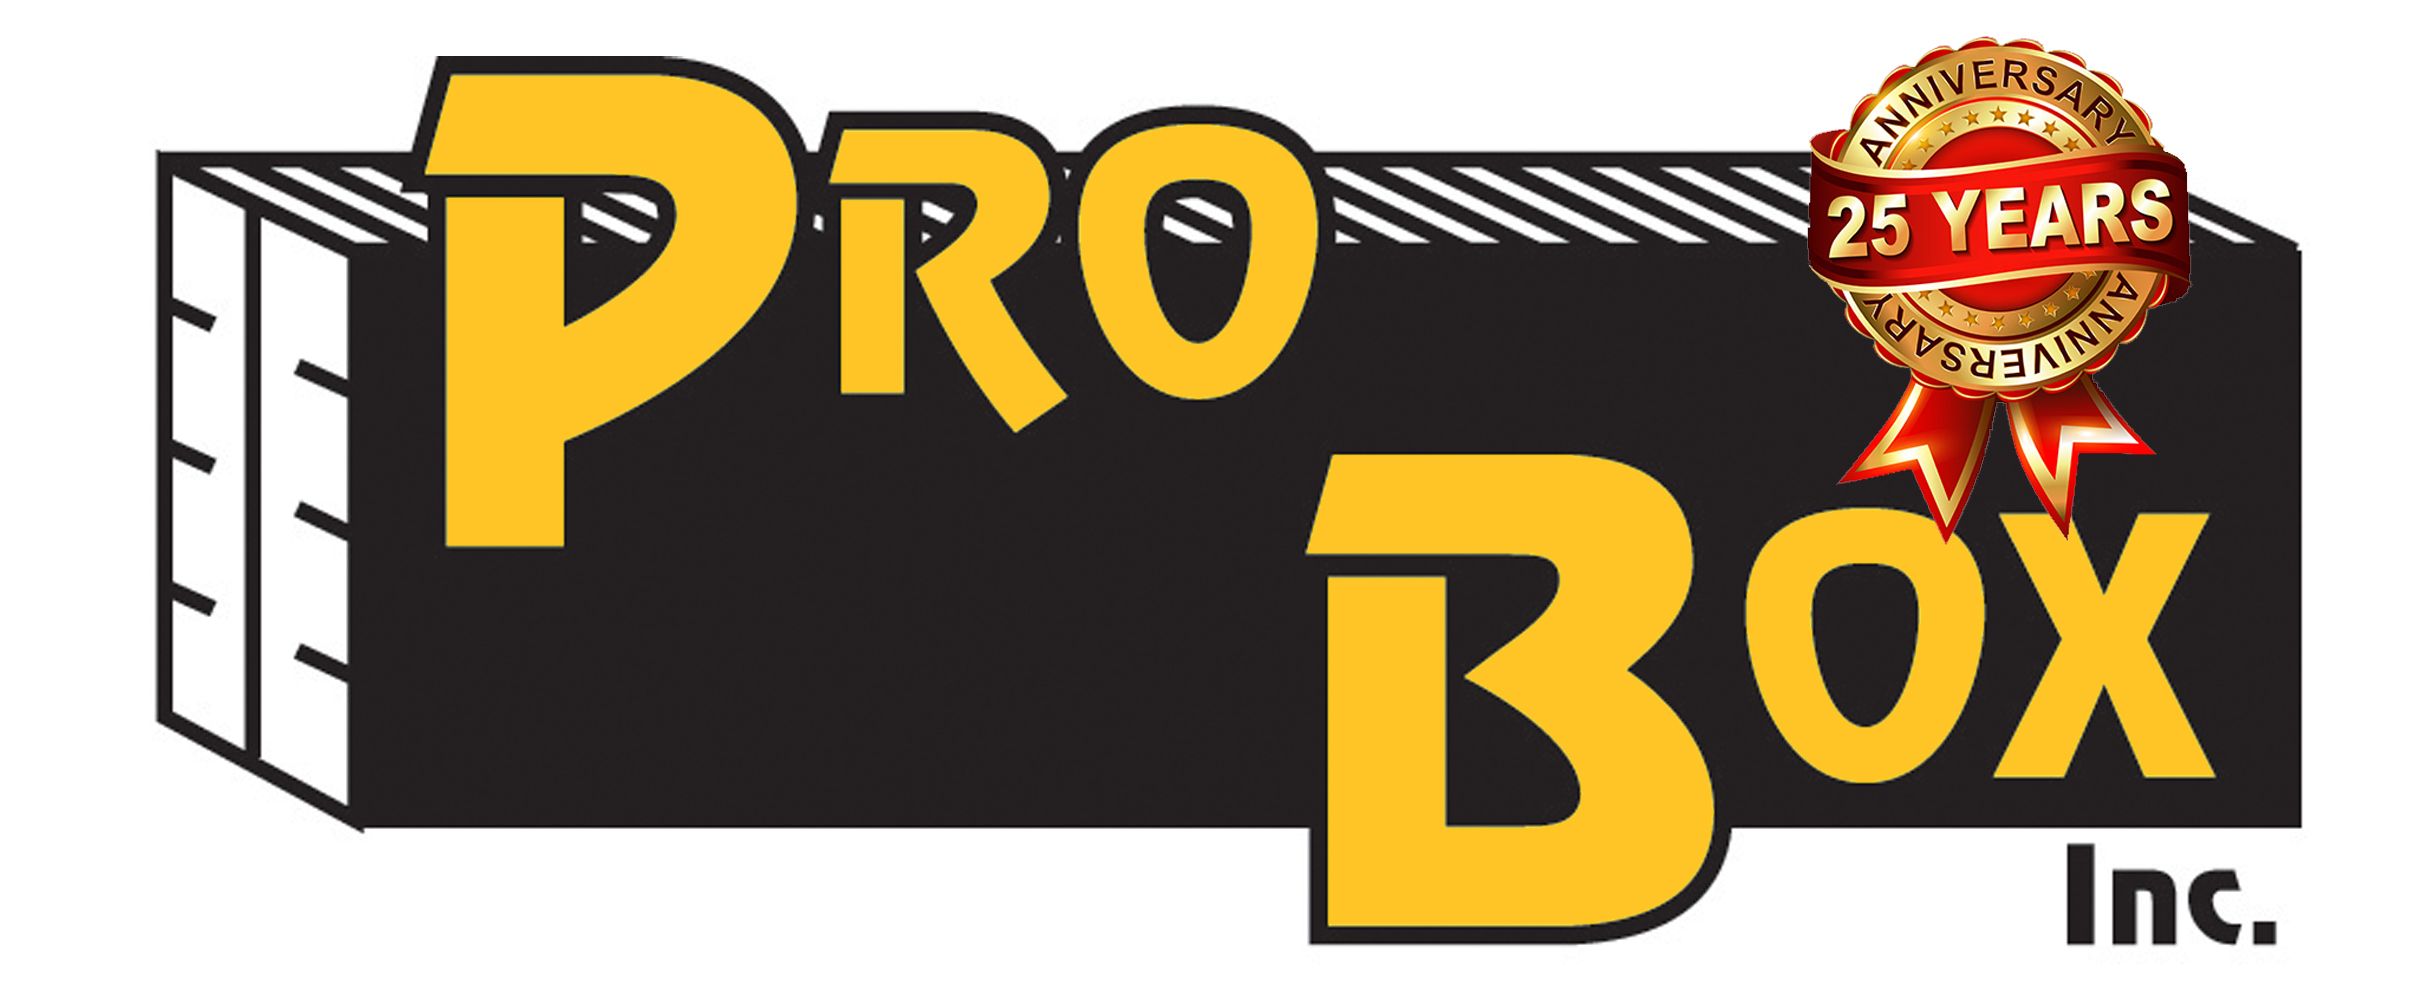 Pro Box Inc